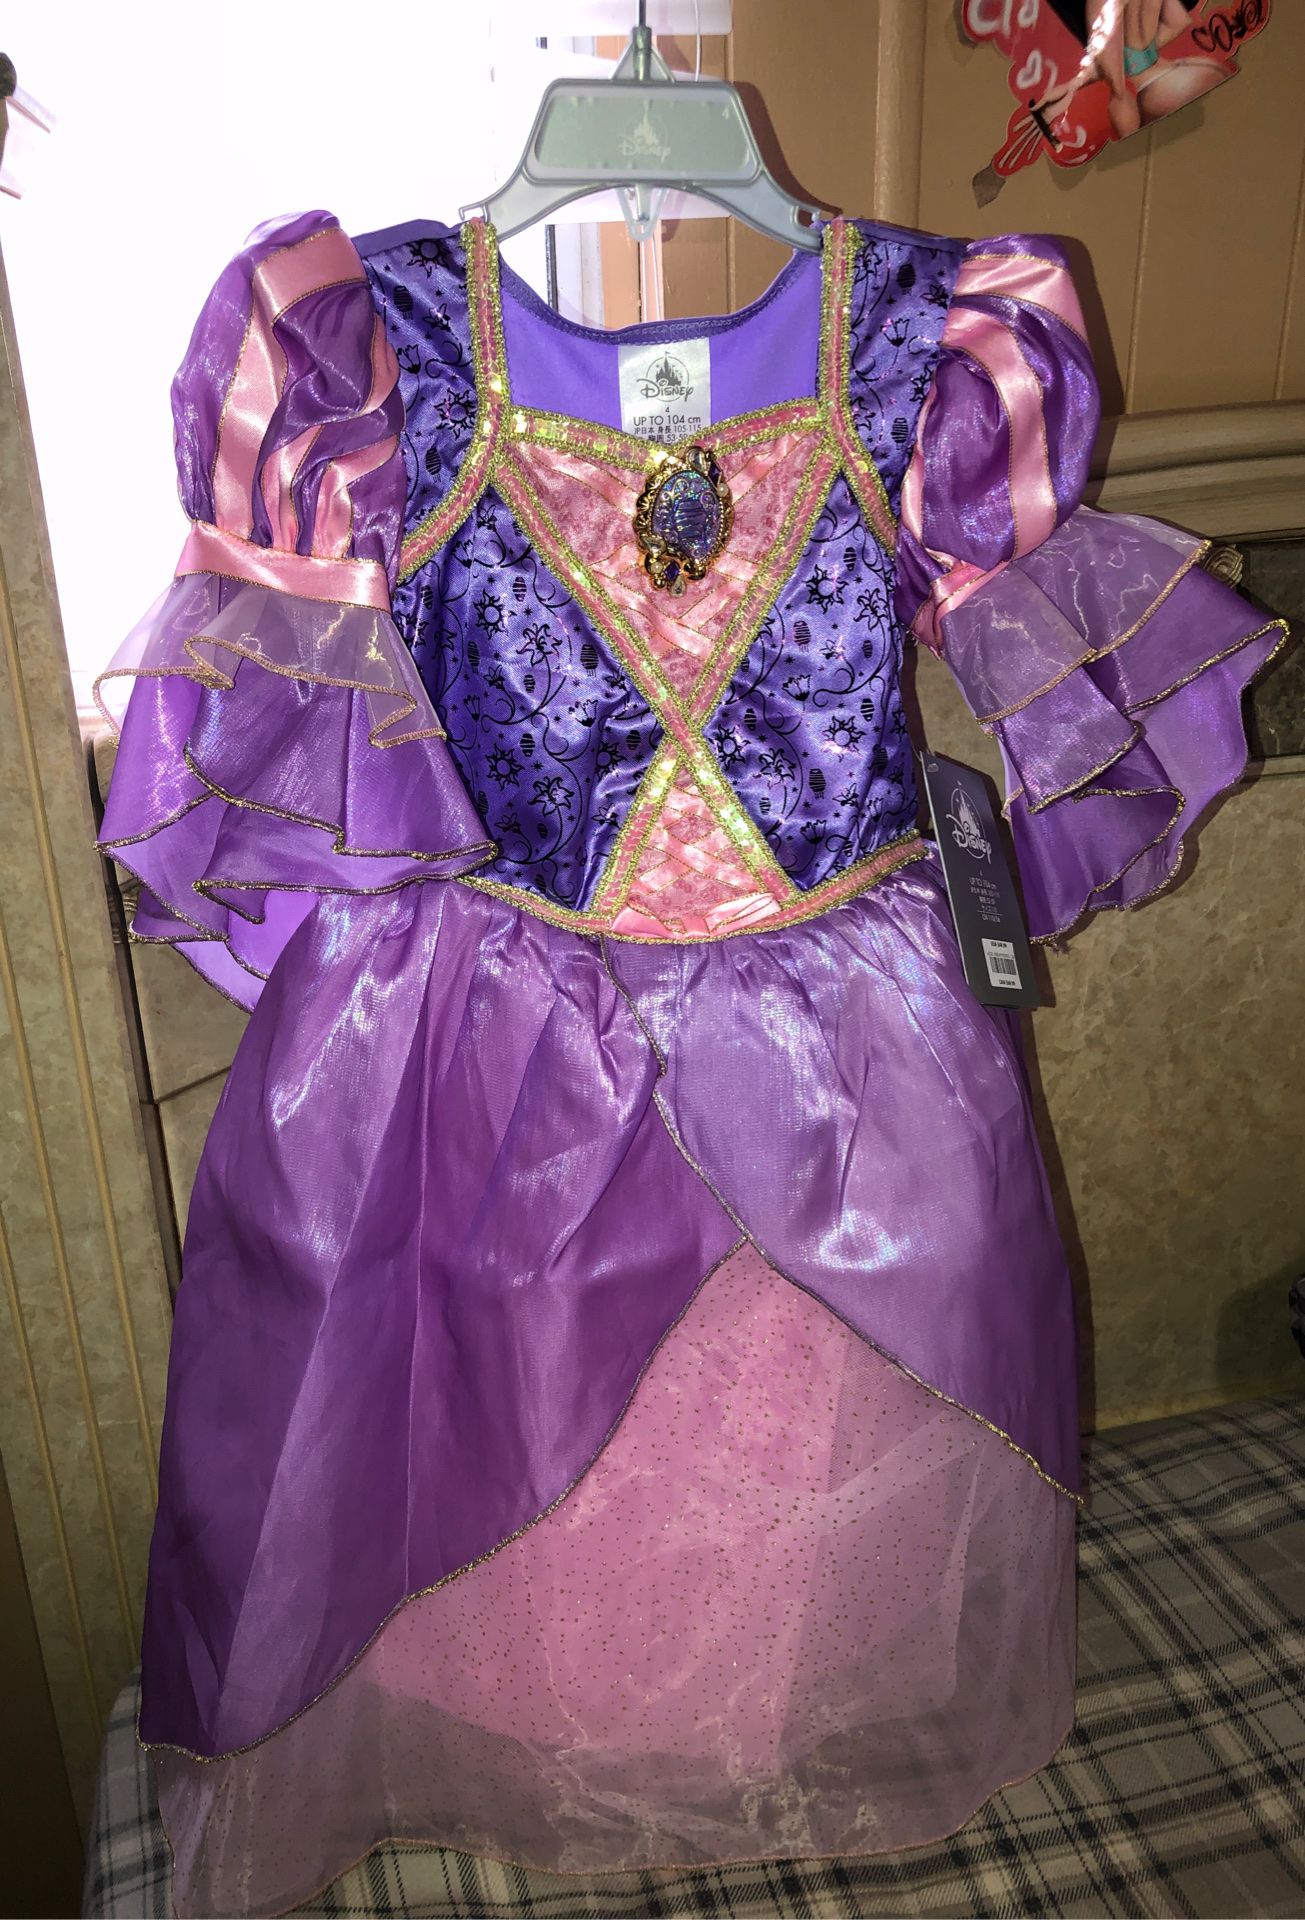 TANGELED “Rapunzel” Costume